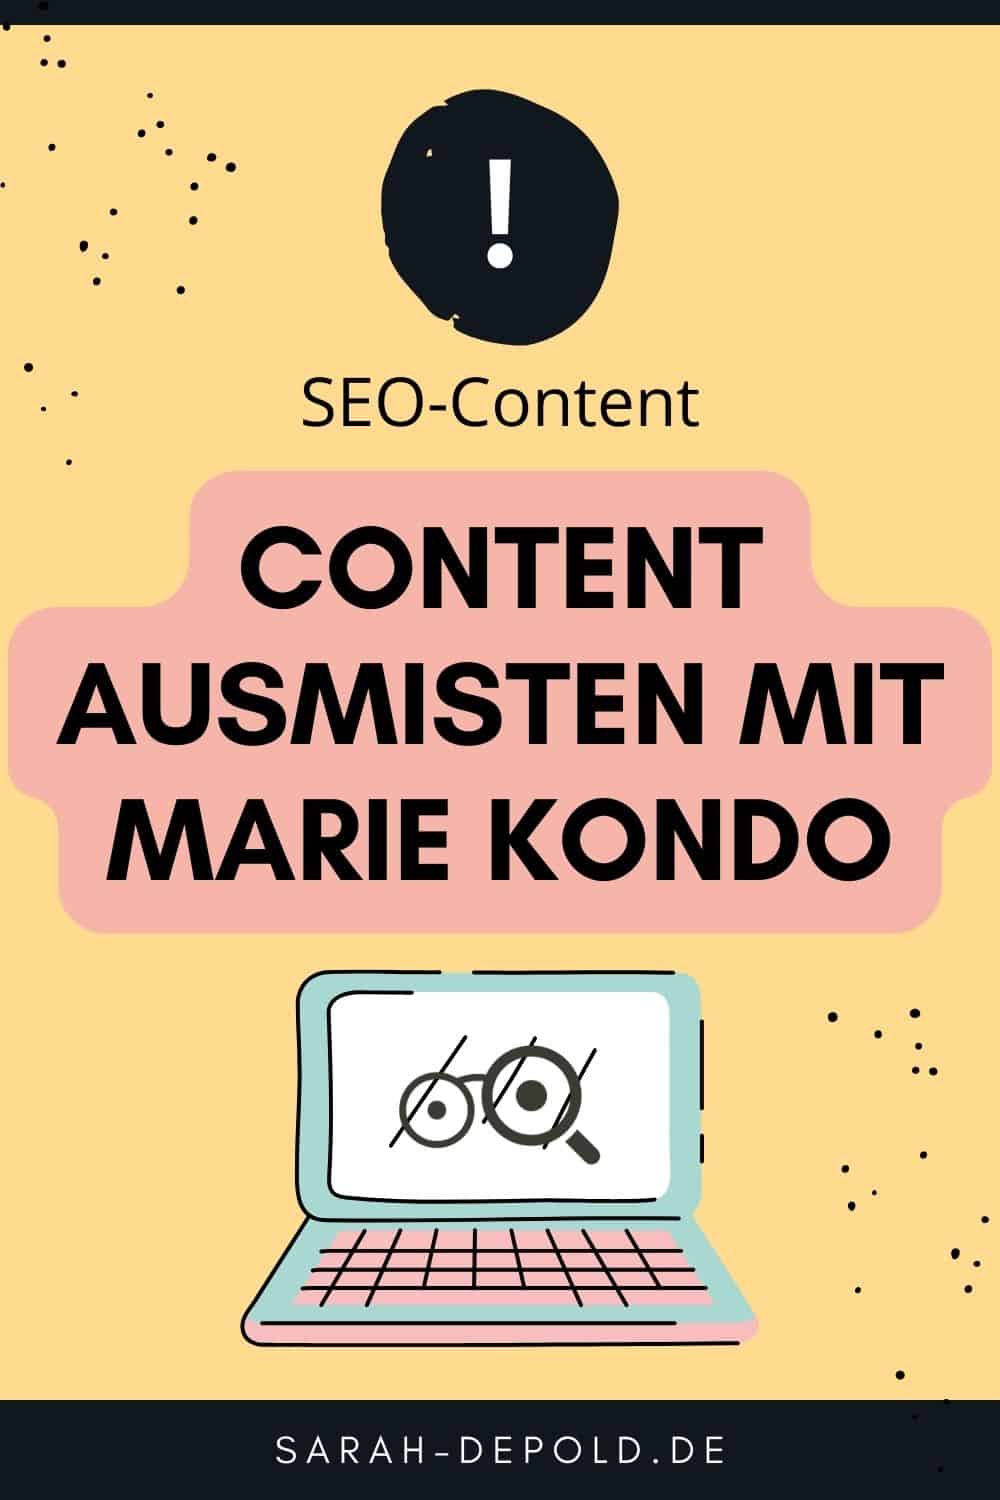 Content ausmisten mit Marie Kondo - SEO-Content - sarah-depold.de